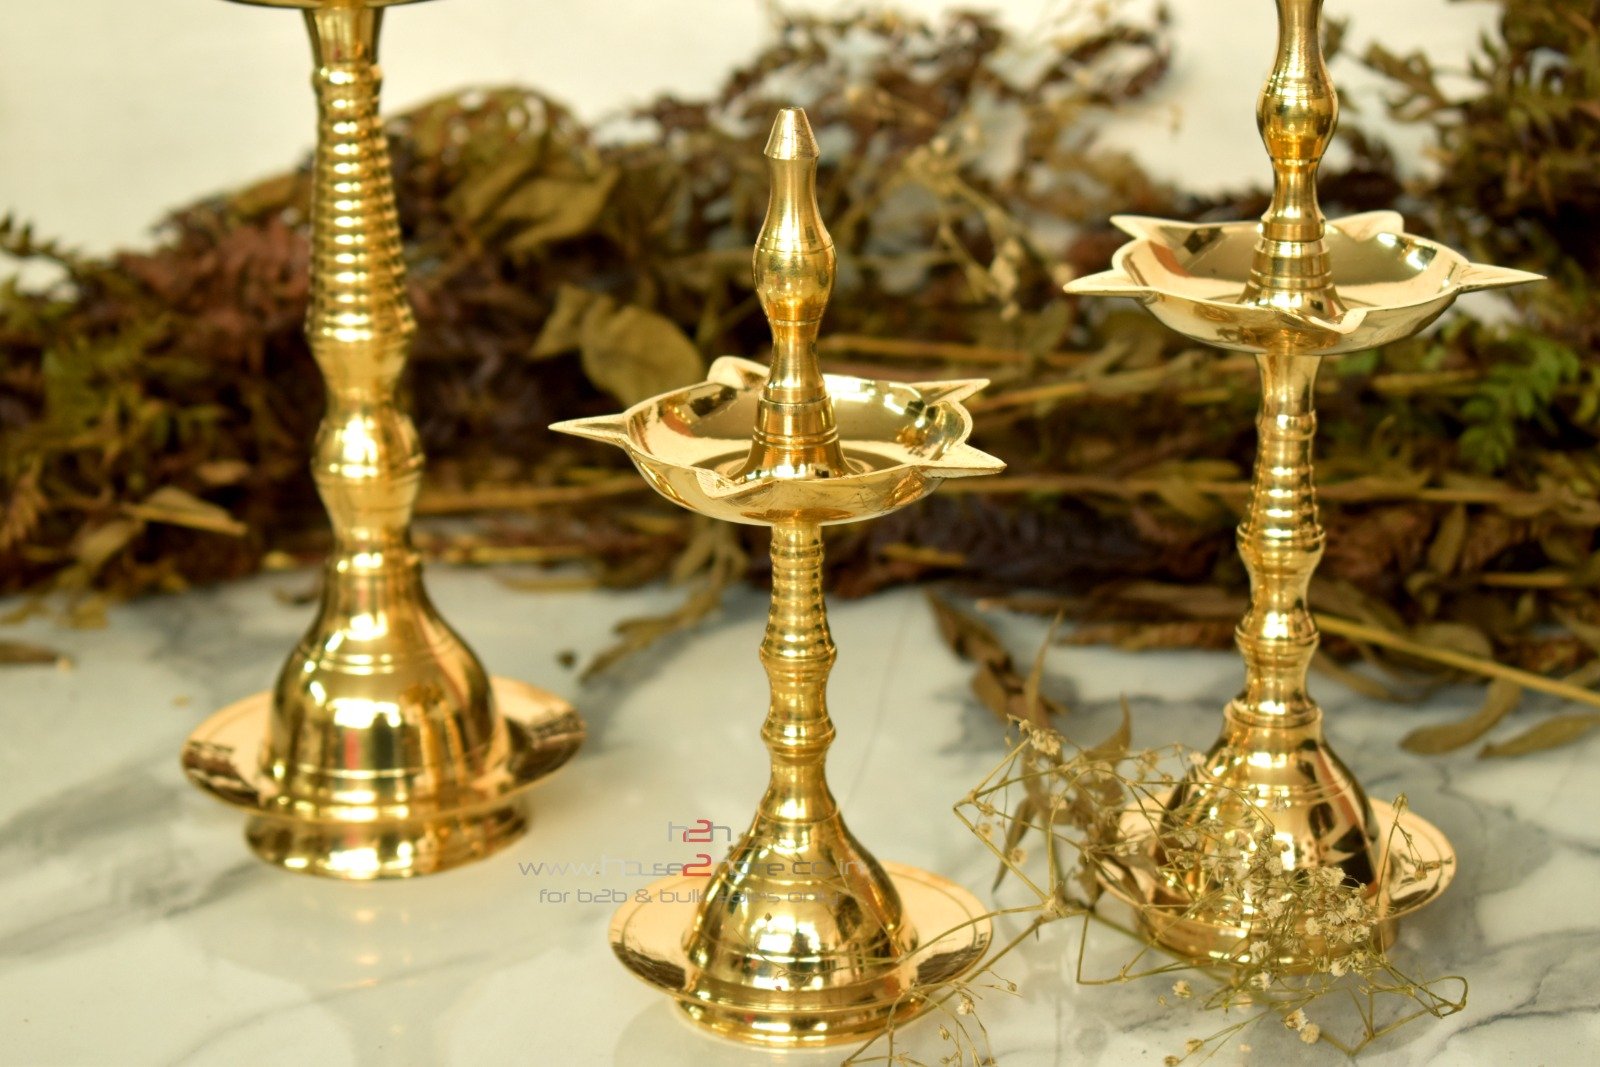 Brass Oil Lamp, Vintage Oil Lamp, Decorative Brass Oil Lamp, Oil